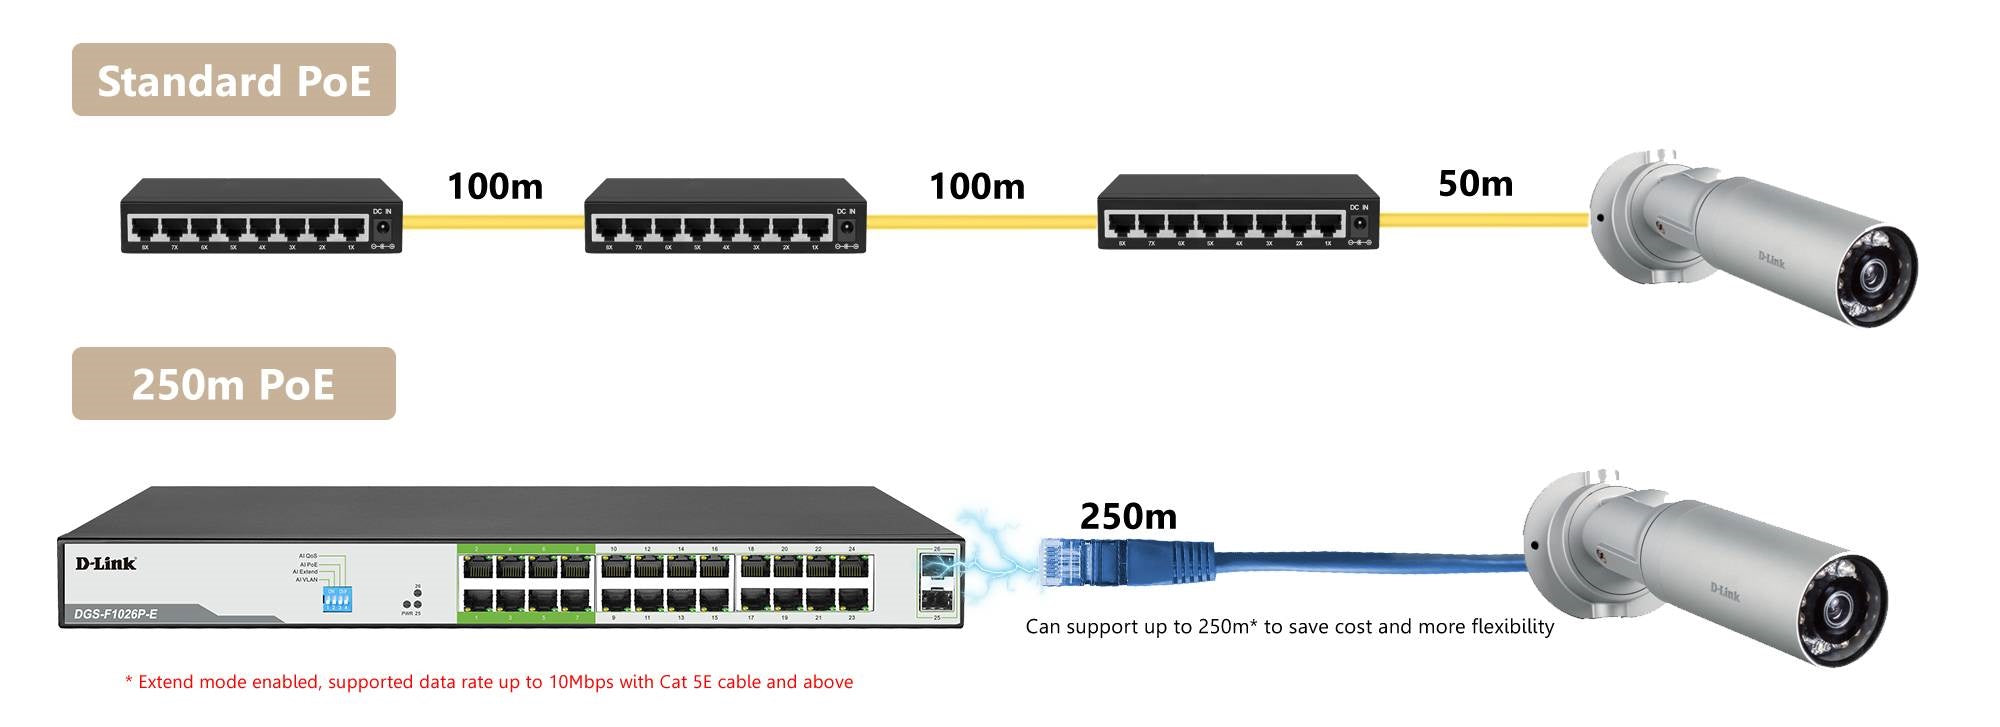 D-Link DGS-F1026P-E 250M 24-Port 1000Mbps PoE Switch with 2 SFP Ports